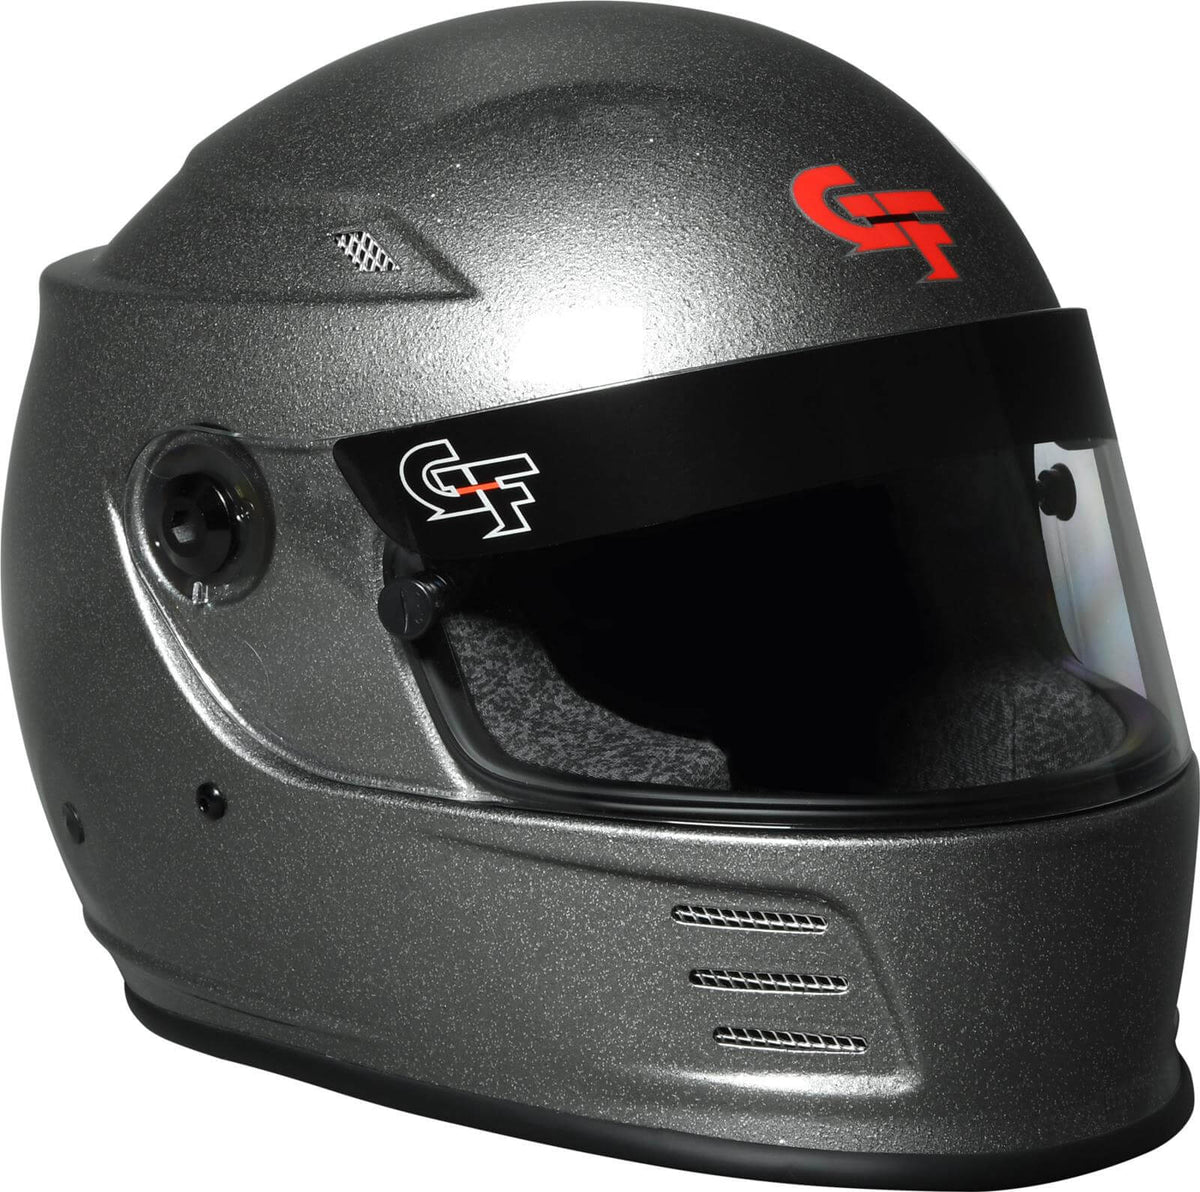 REVO FLASH SA2020 Helmet - $313.65